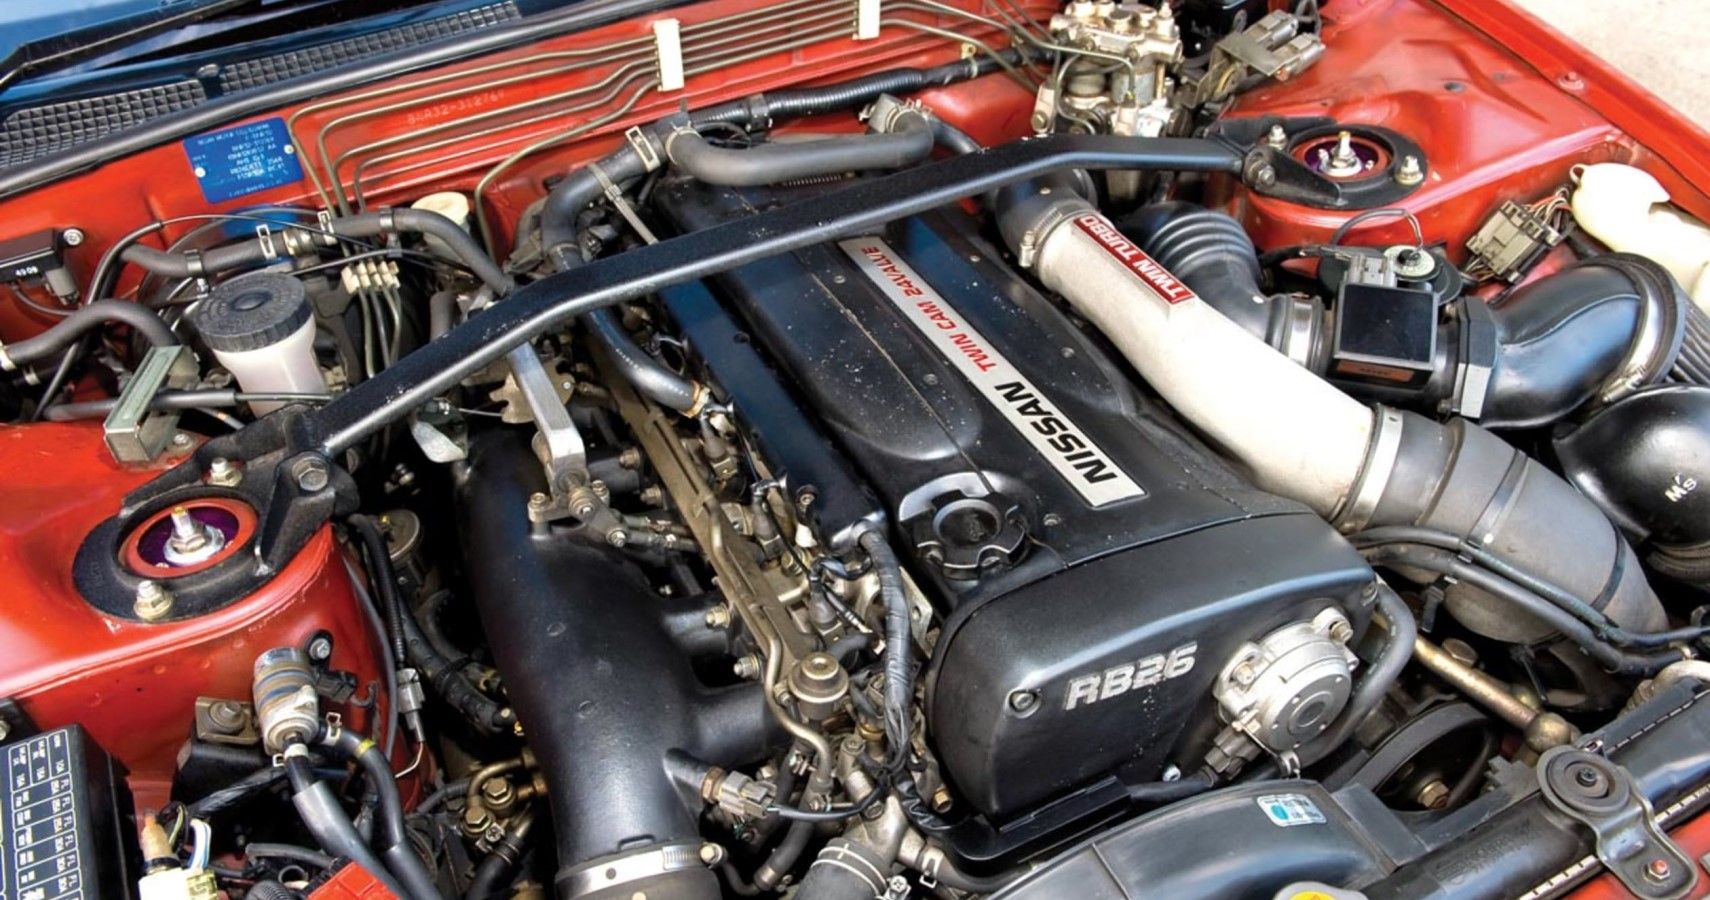 Nissan Skyline R32 GT-R engine bay view